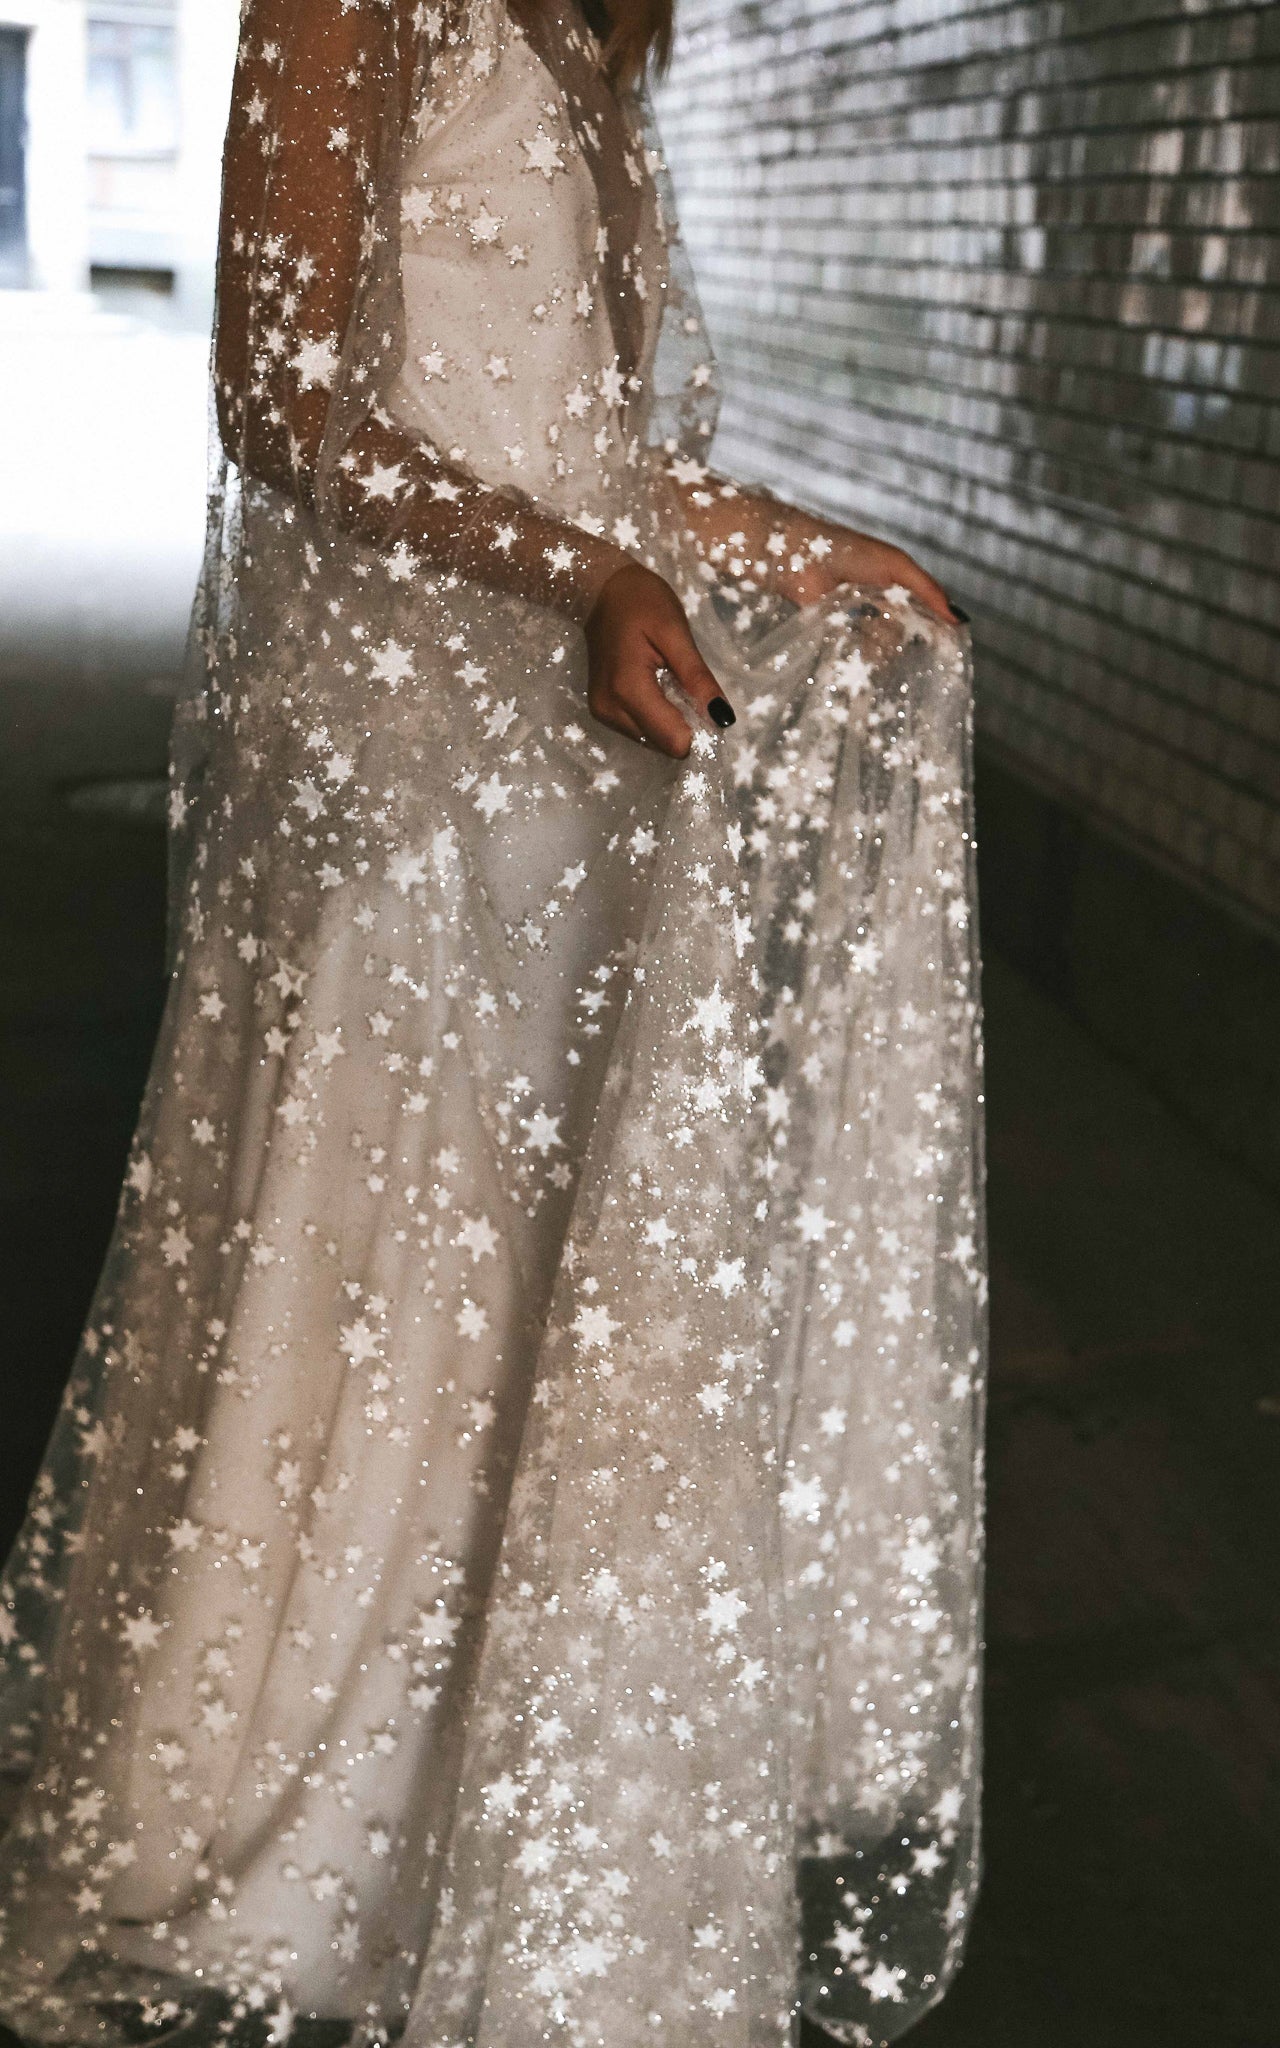  Fairytale Ethereal Dream Elegant Modern Long Sleeve Wedding Dress with Stars